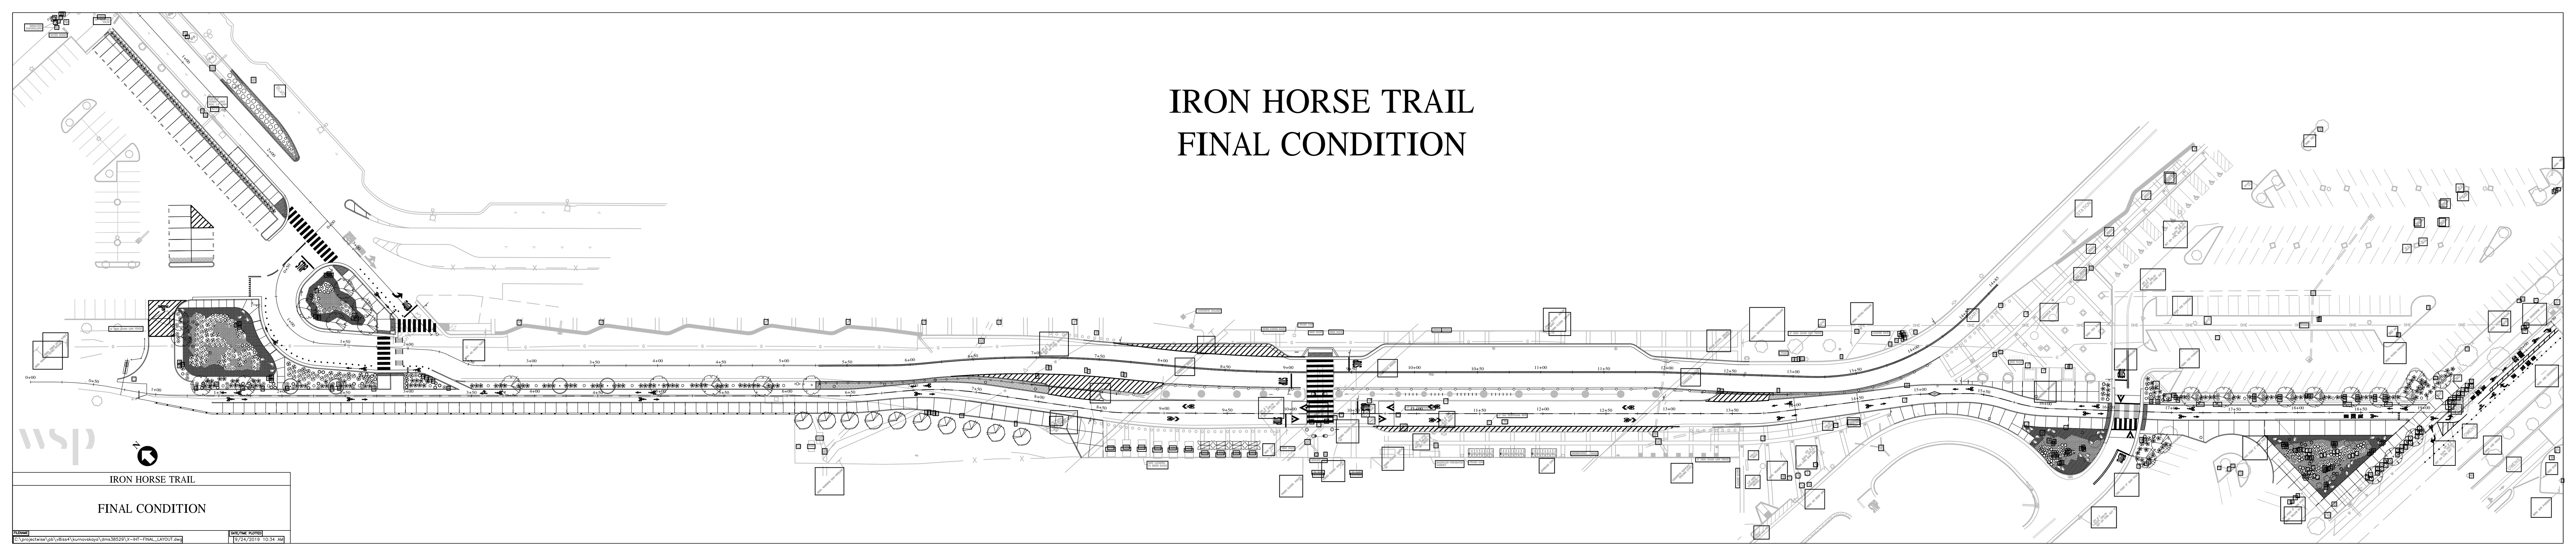 Iron Horse Trail final condition blueprint